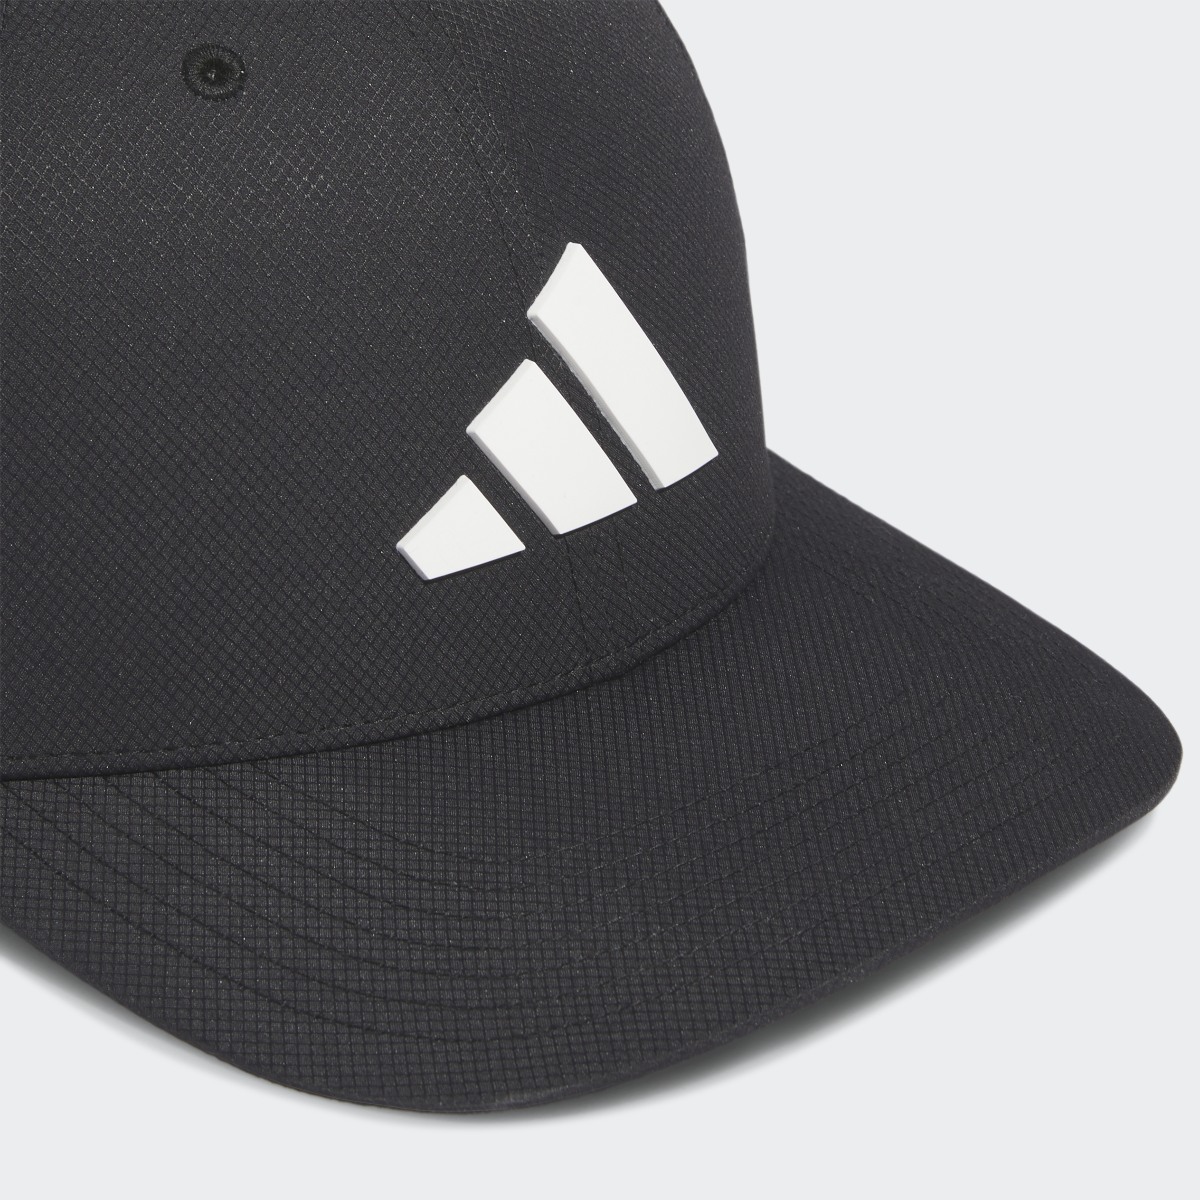 Adidas Tour Snapback Hat. 4